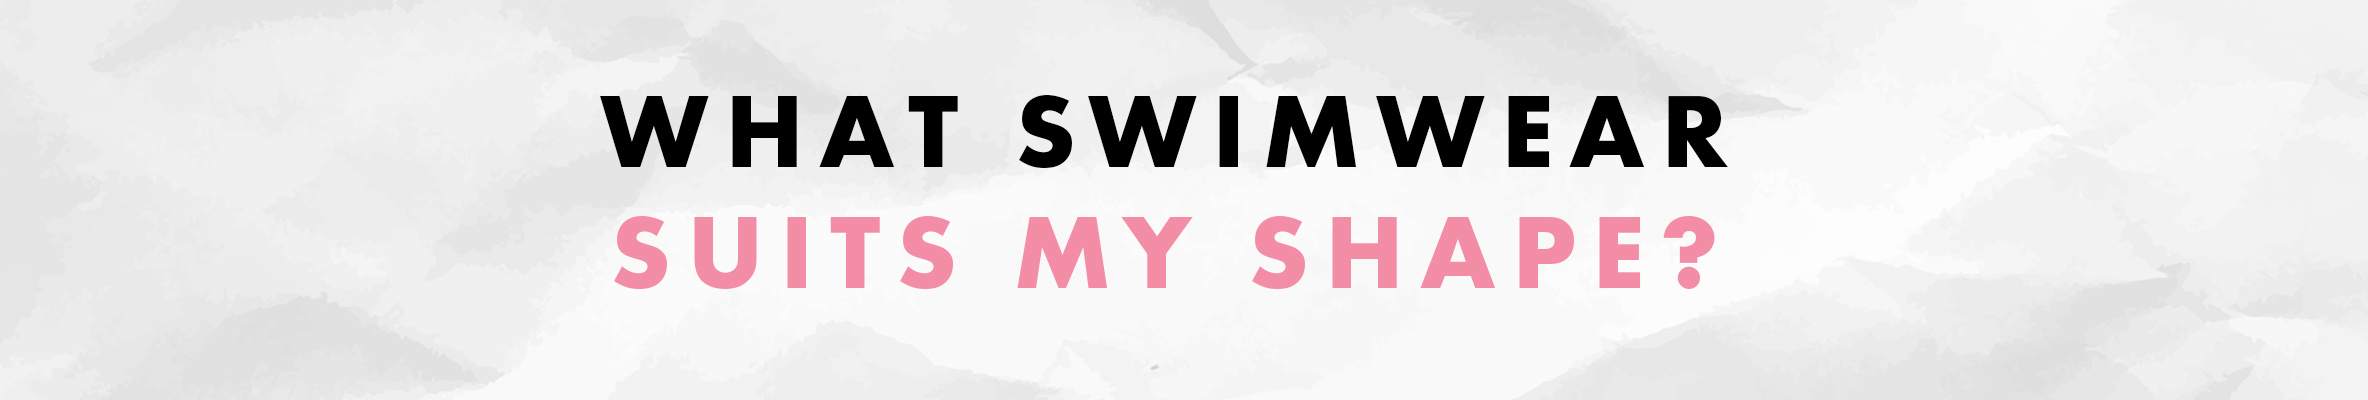 What Swimwear Suits My Shape?